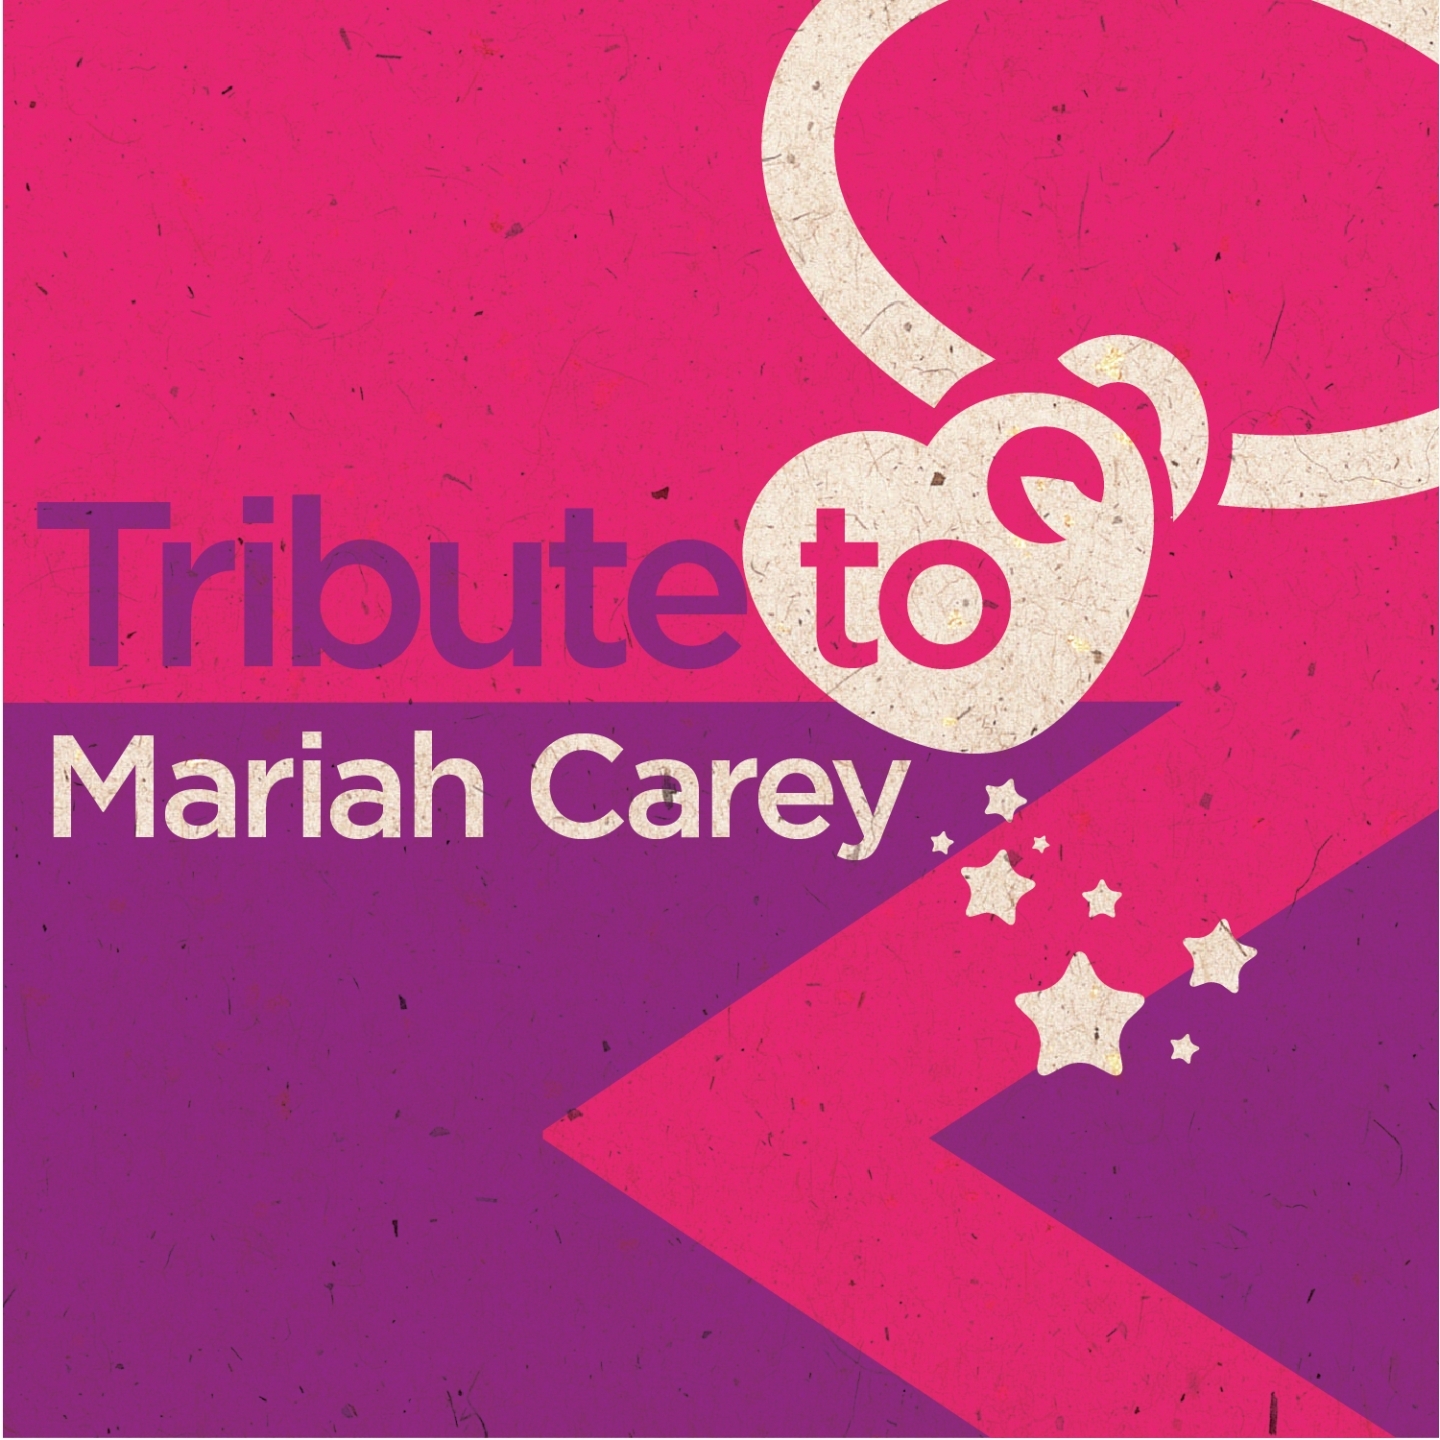 Tribute to Mariah Carey